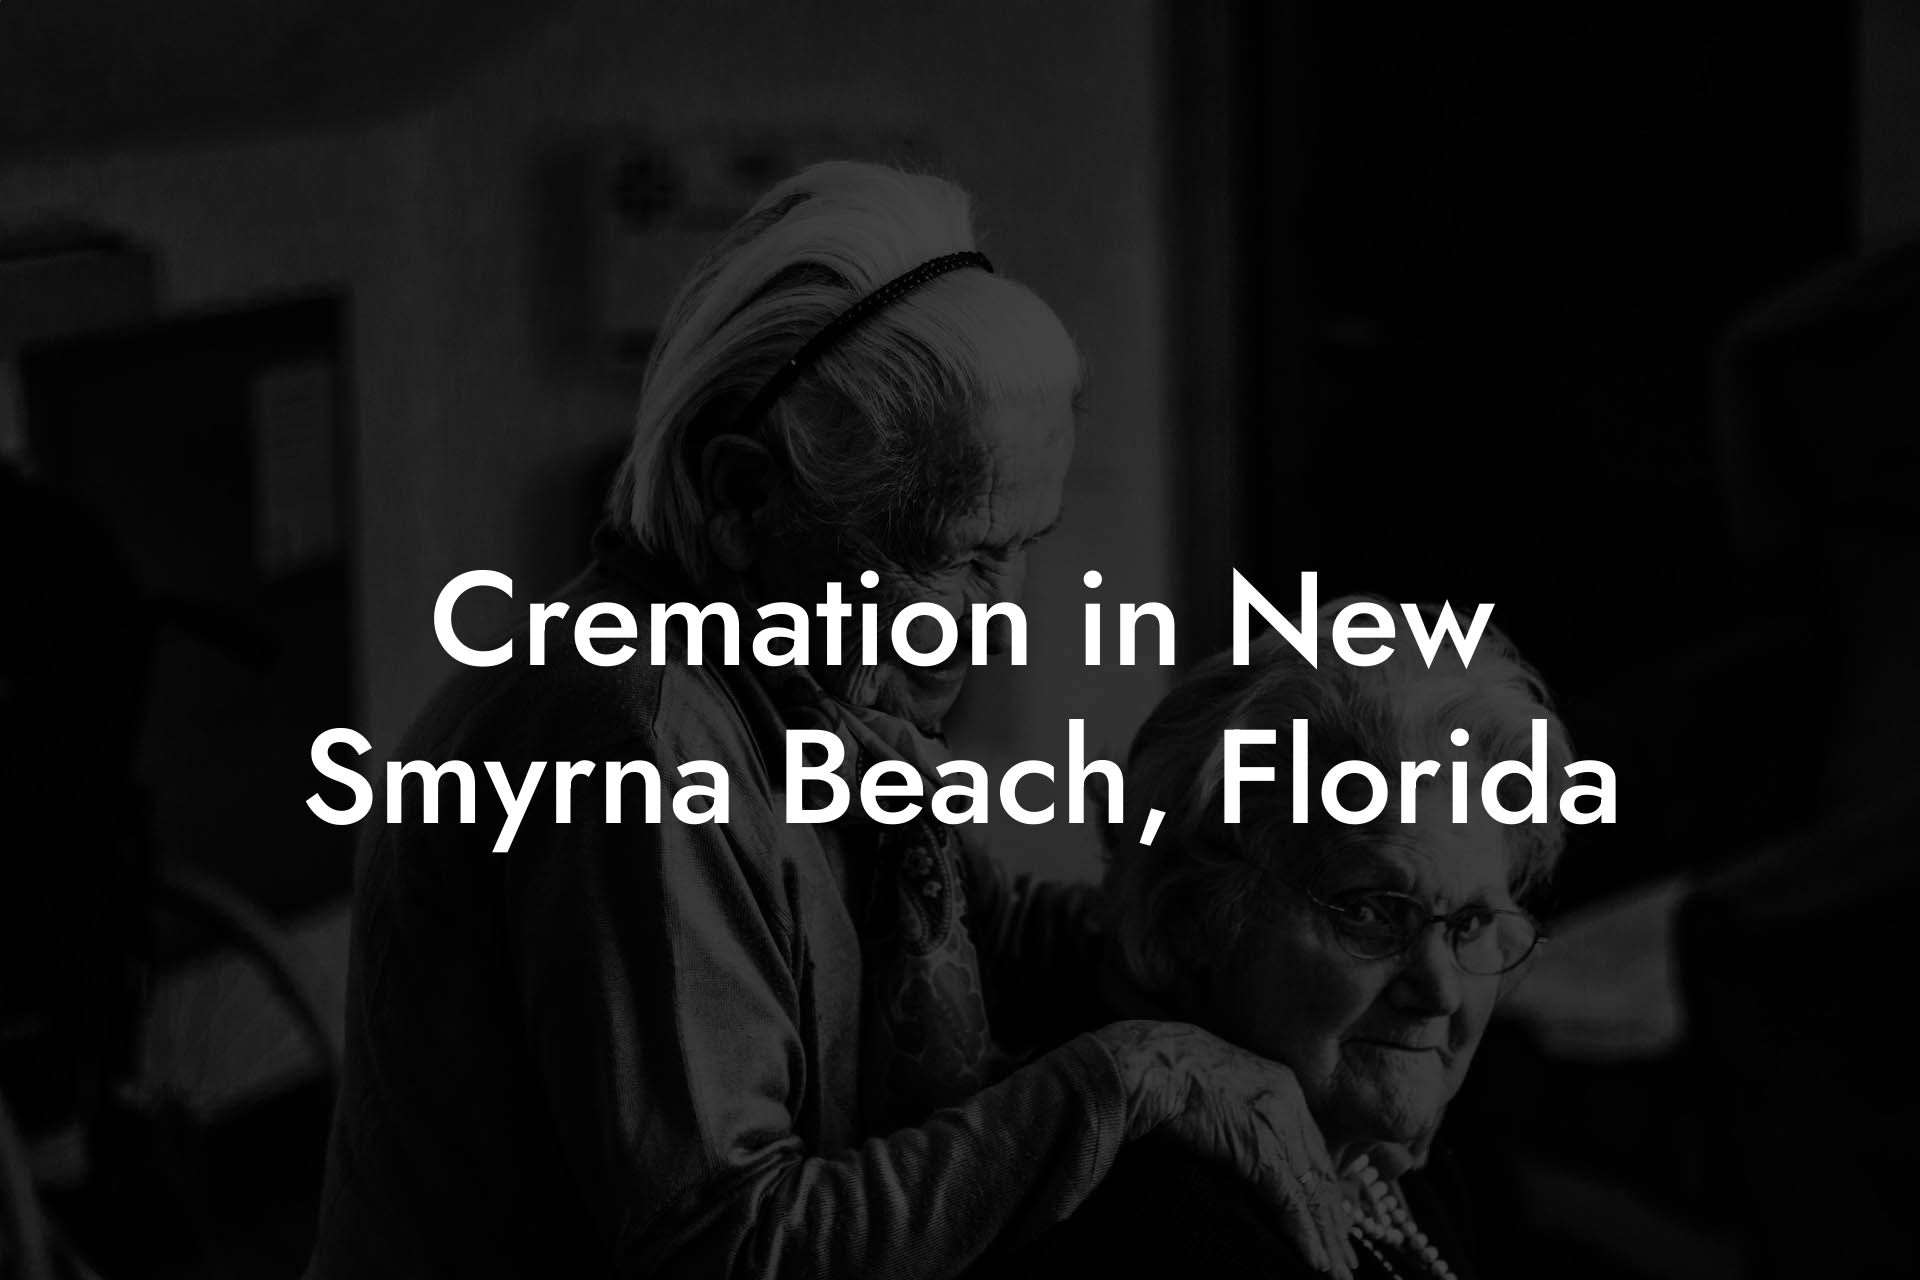 Cremation in New Smyrna Beach, Florida